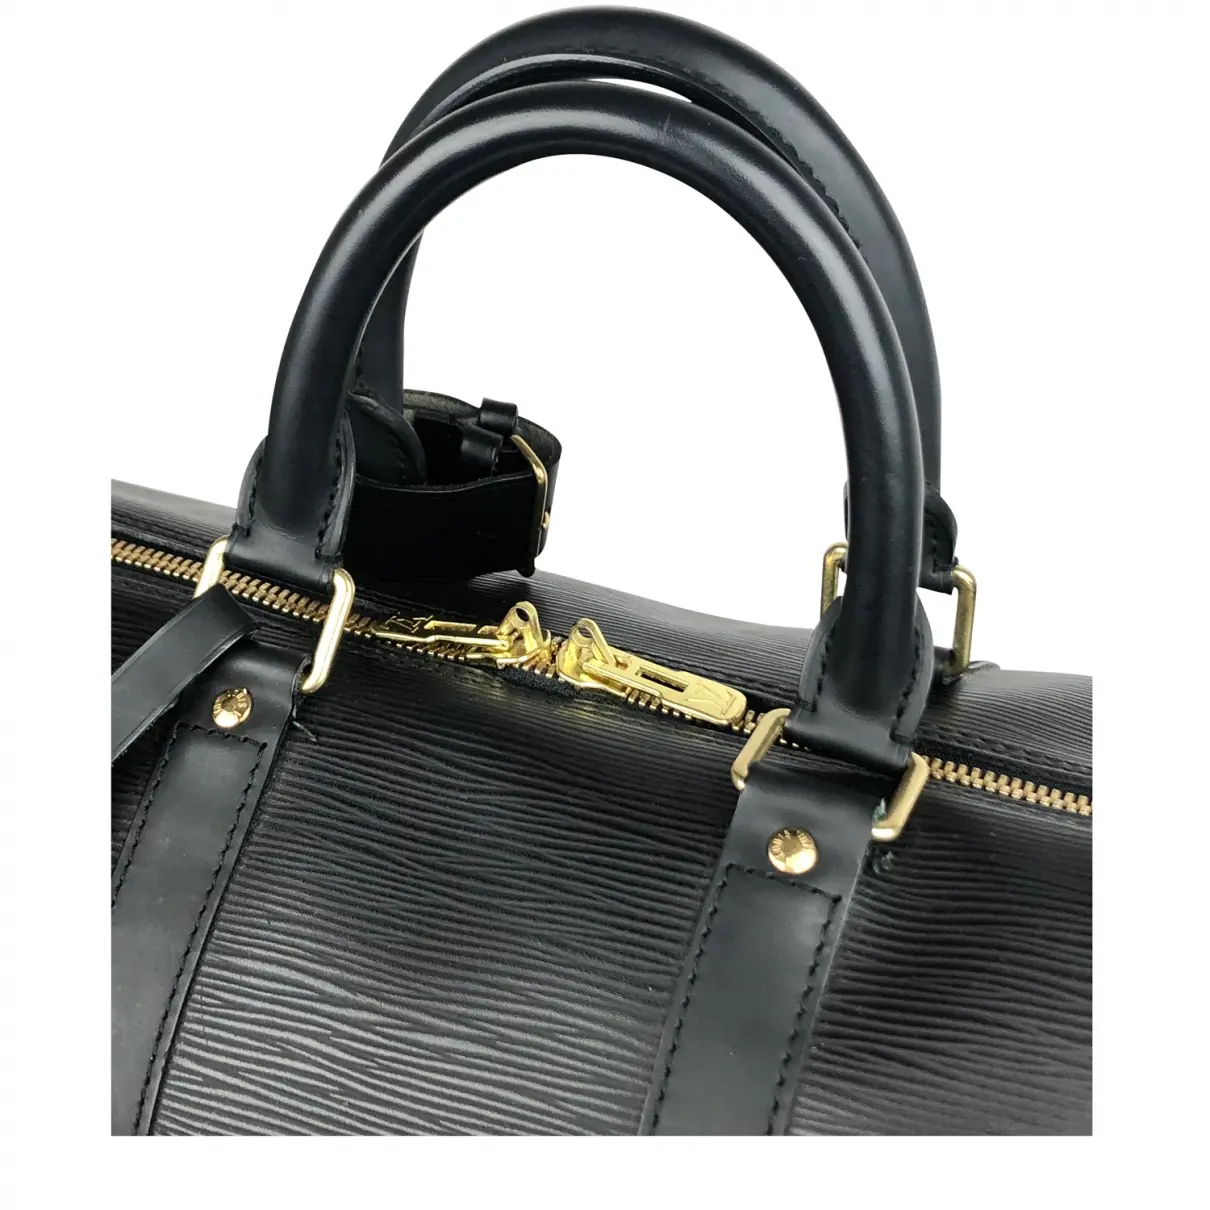 Keepall leather travel bag Louis Vuitton - Vintage